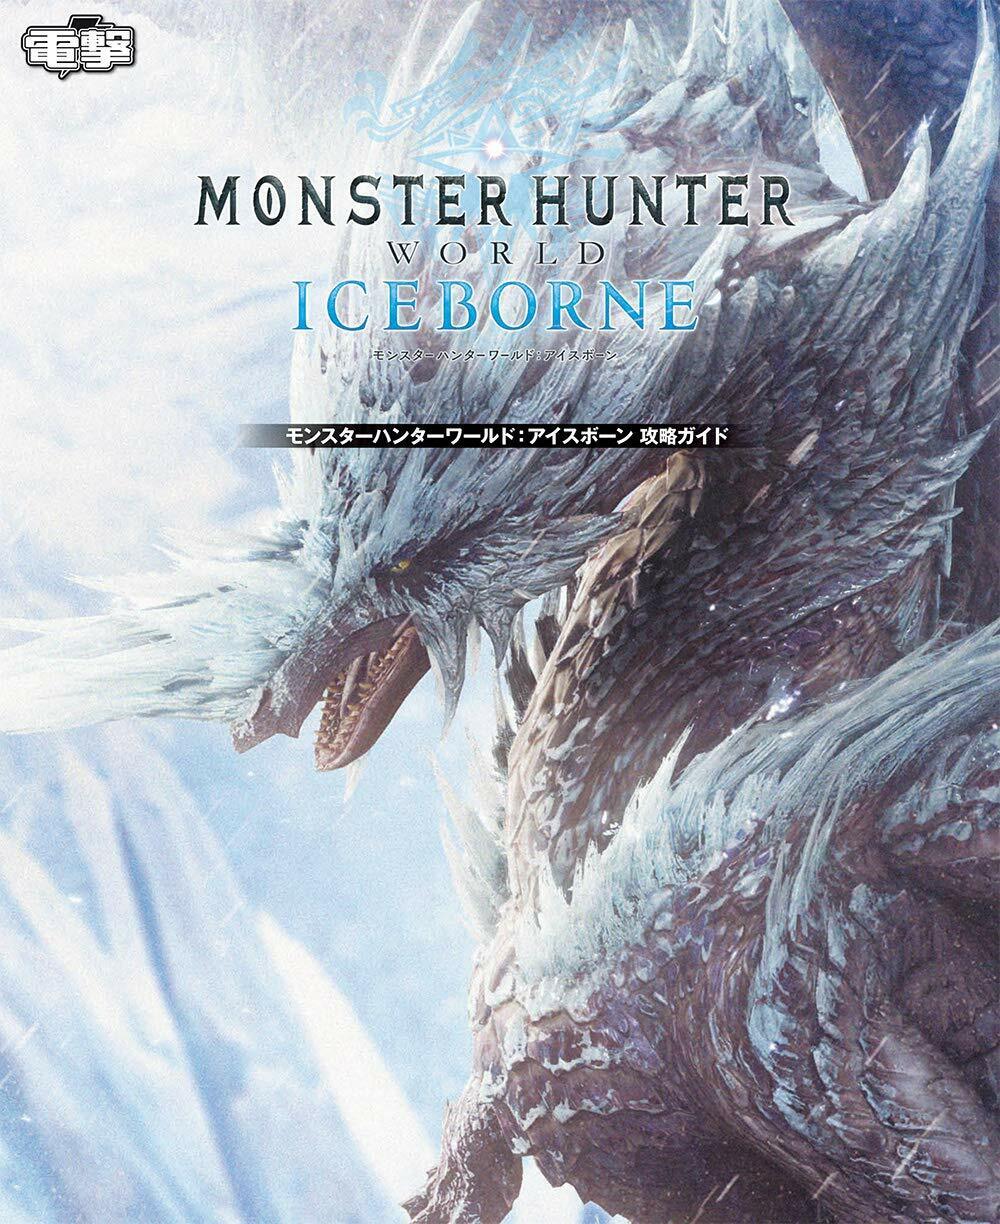 Monster Hunter World : Iceborn Hunting Guide Book Game Walkthrough manual Japan